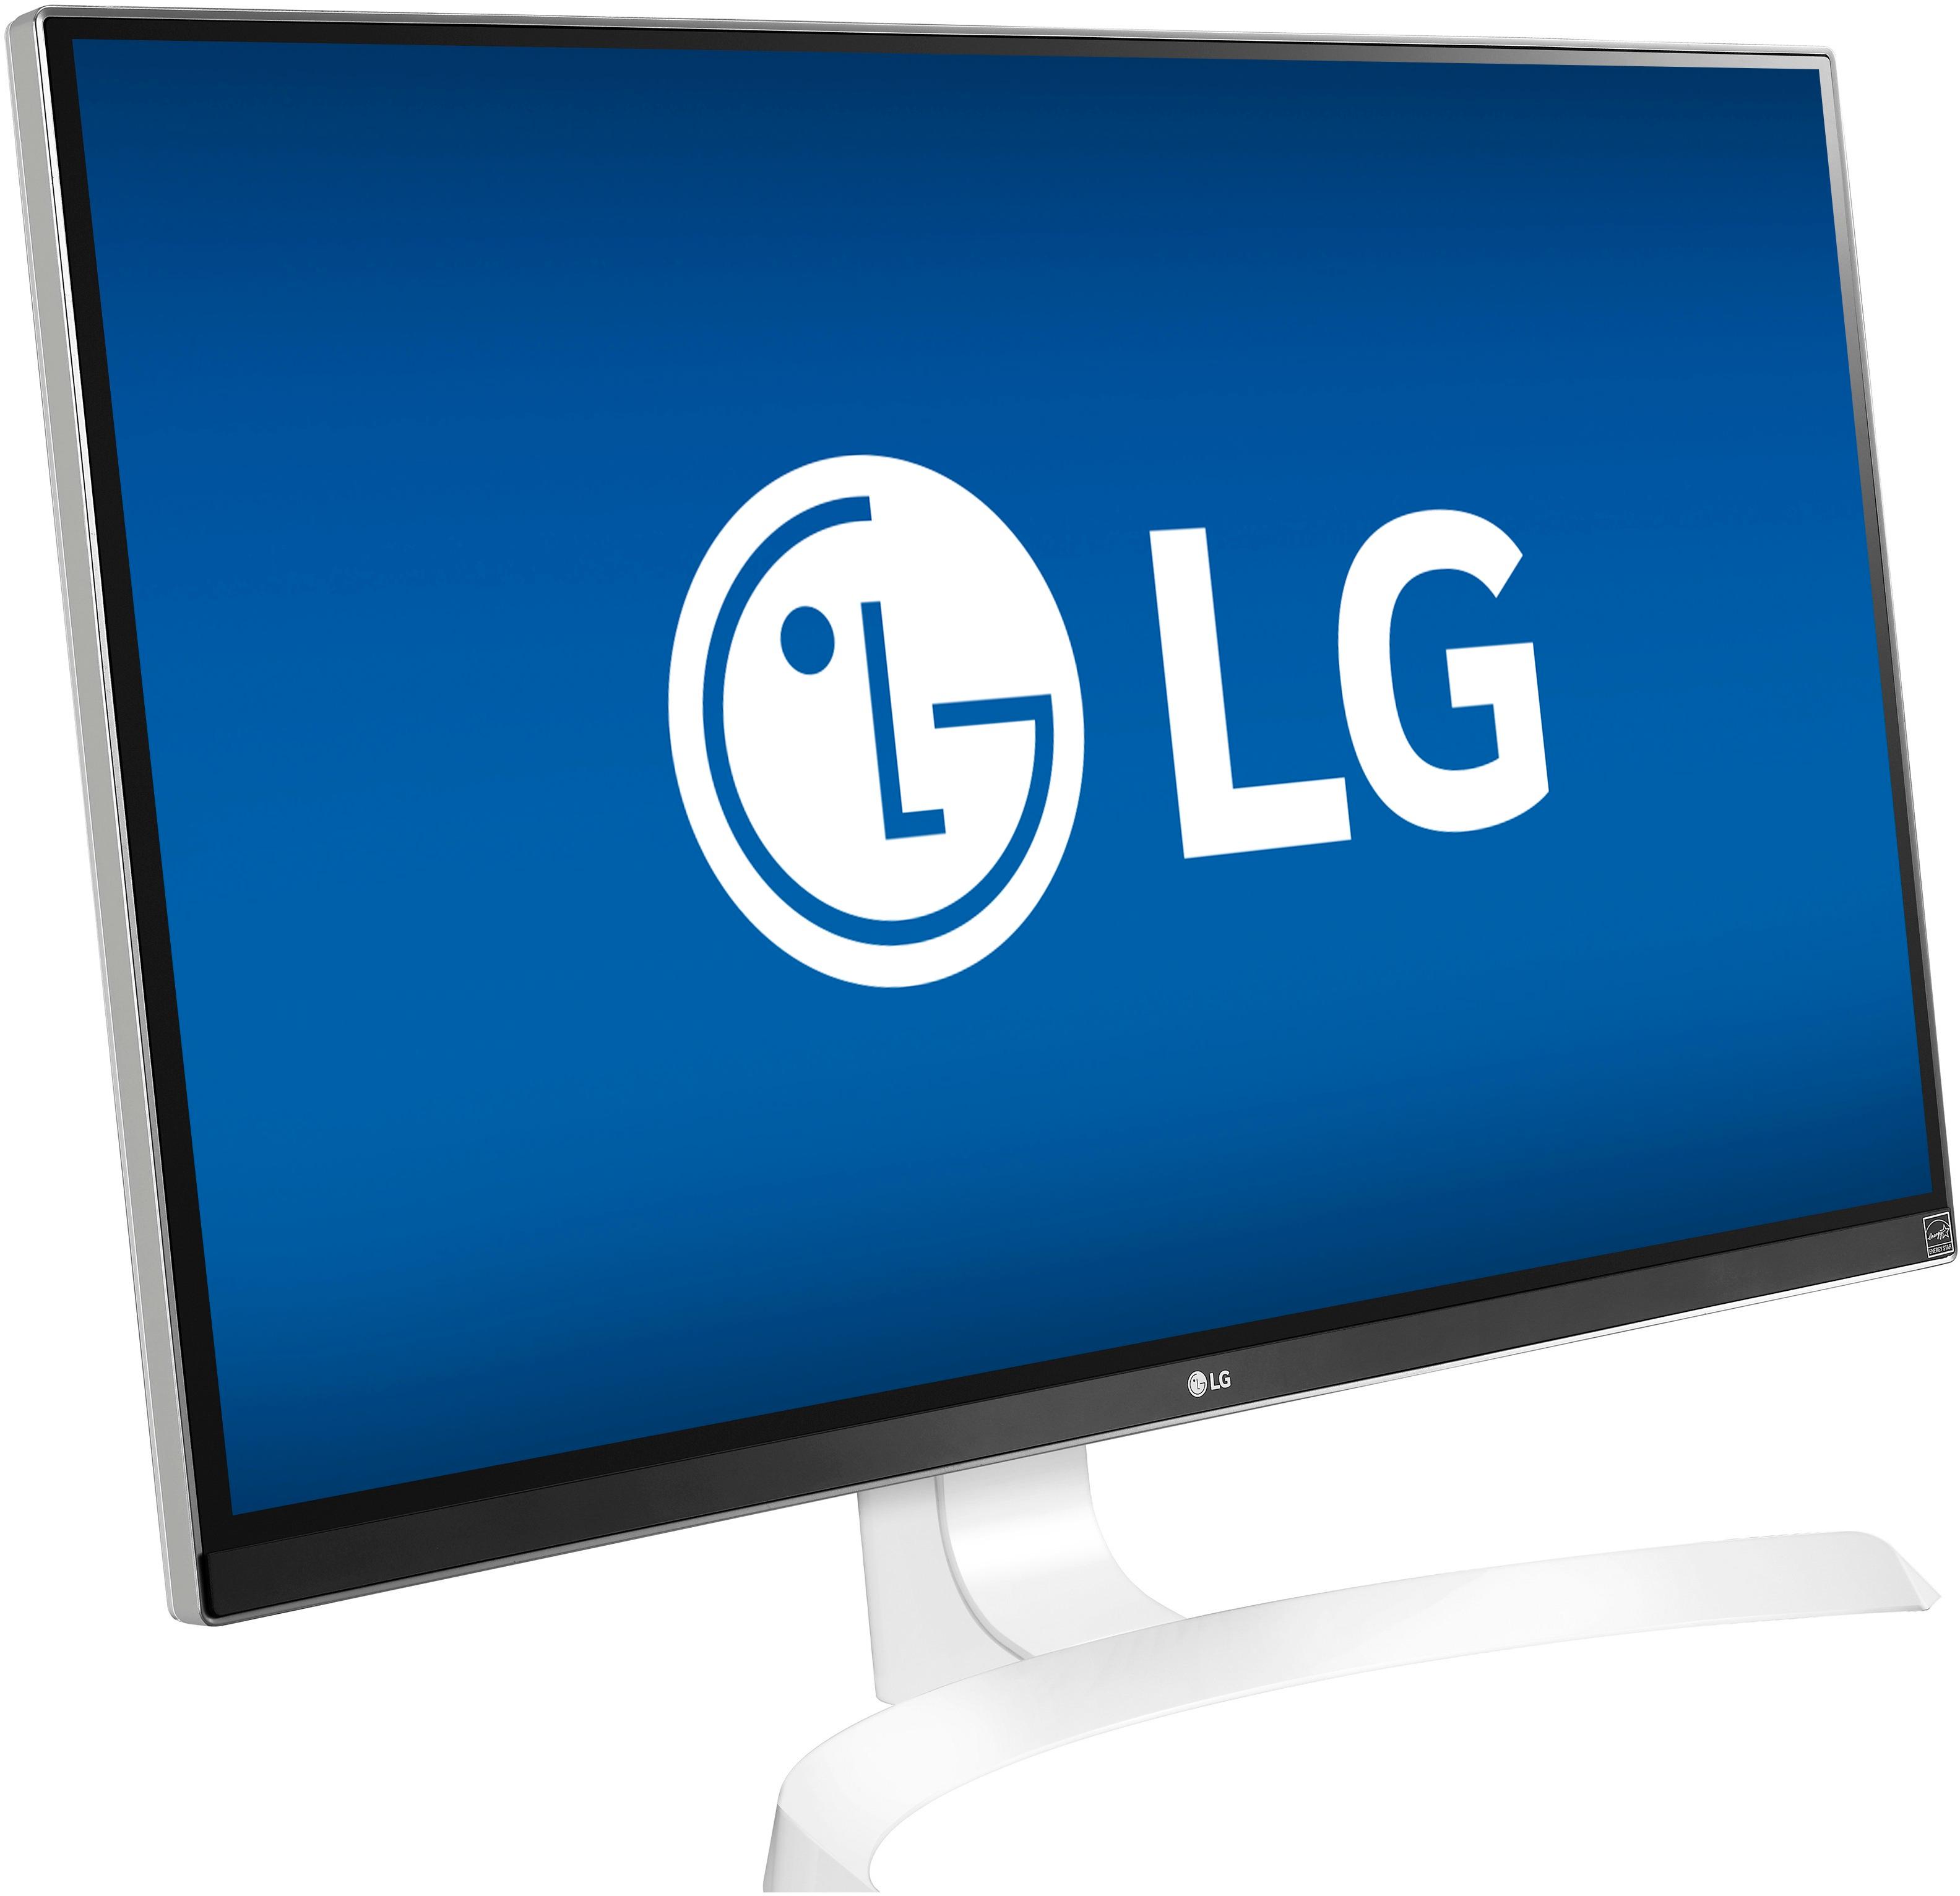 Comprar Monitor LG IPS 27 - Tienda LG